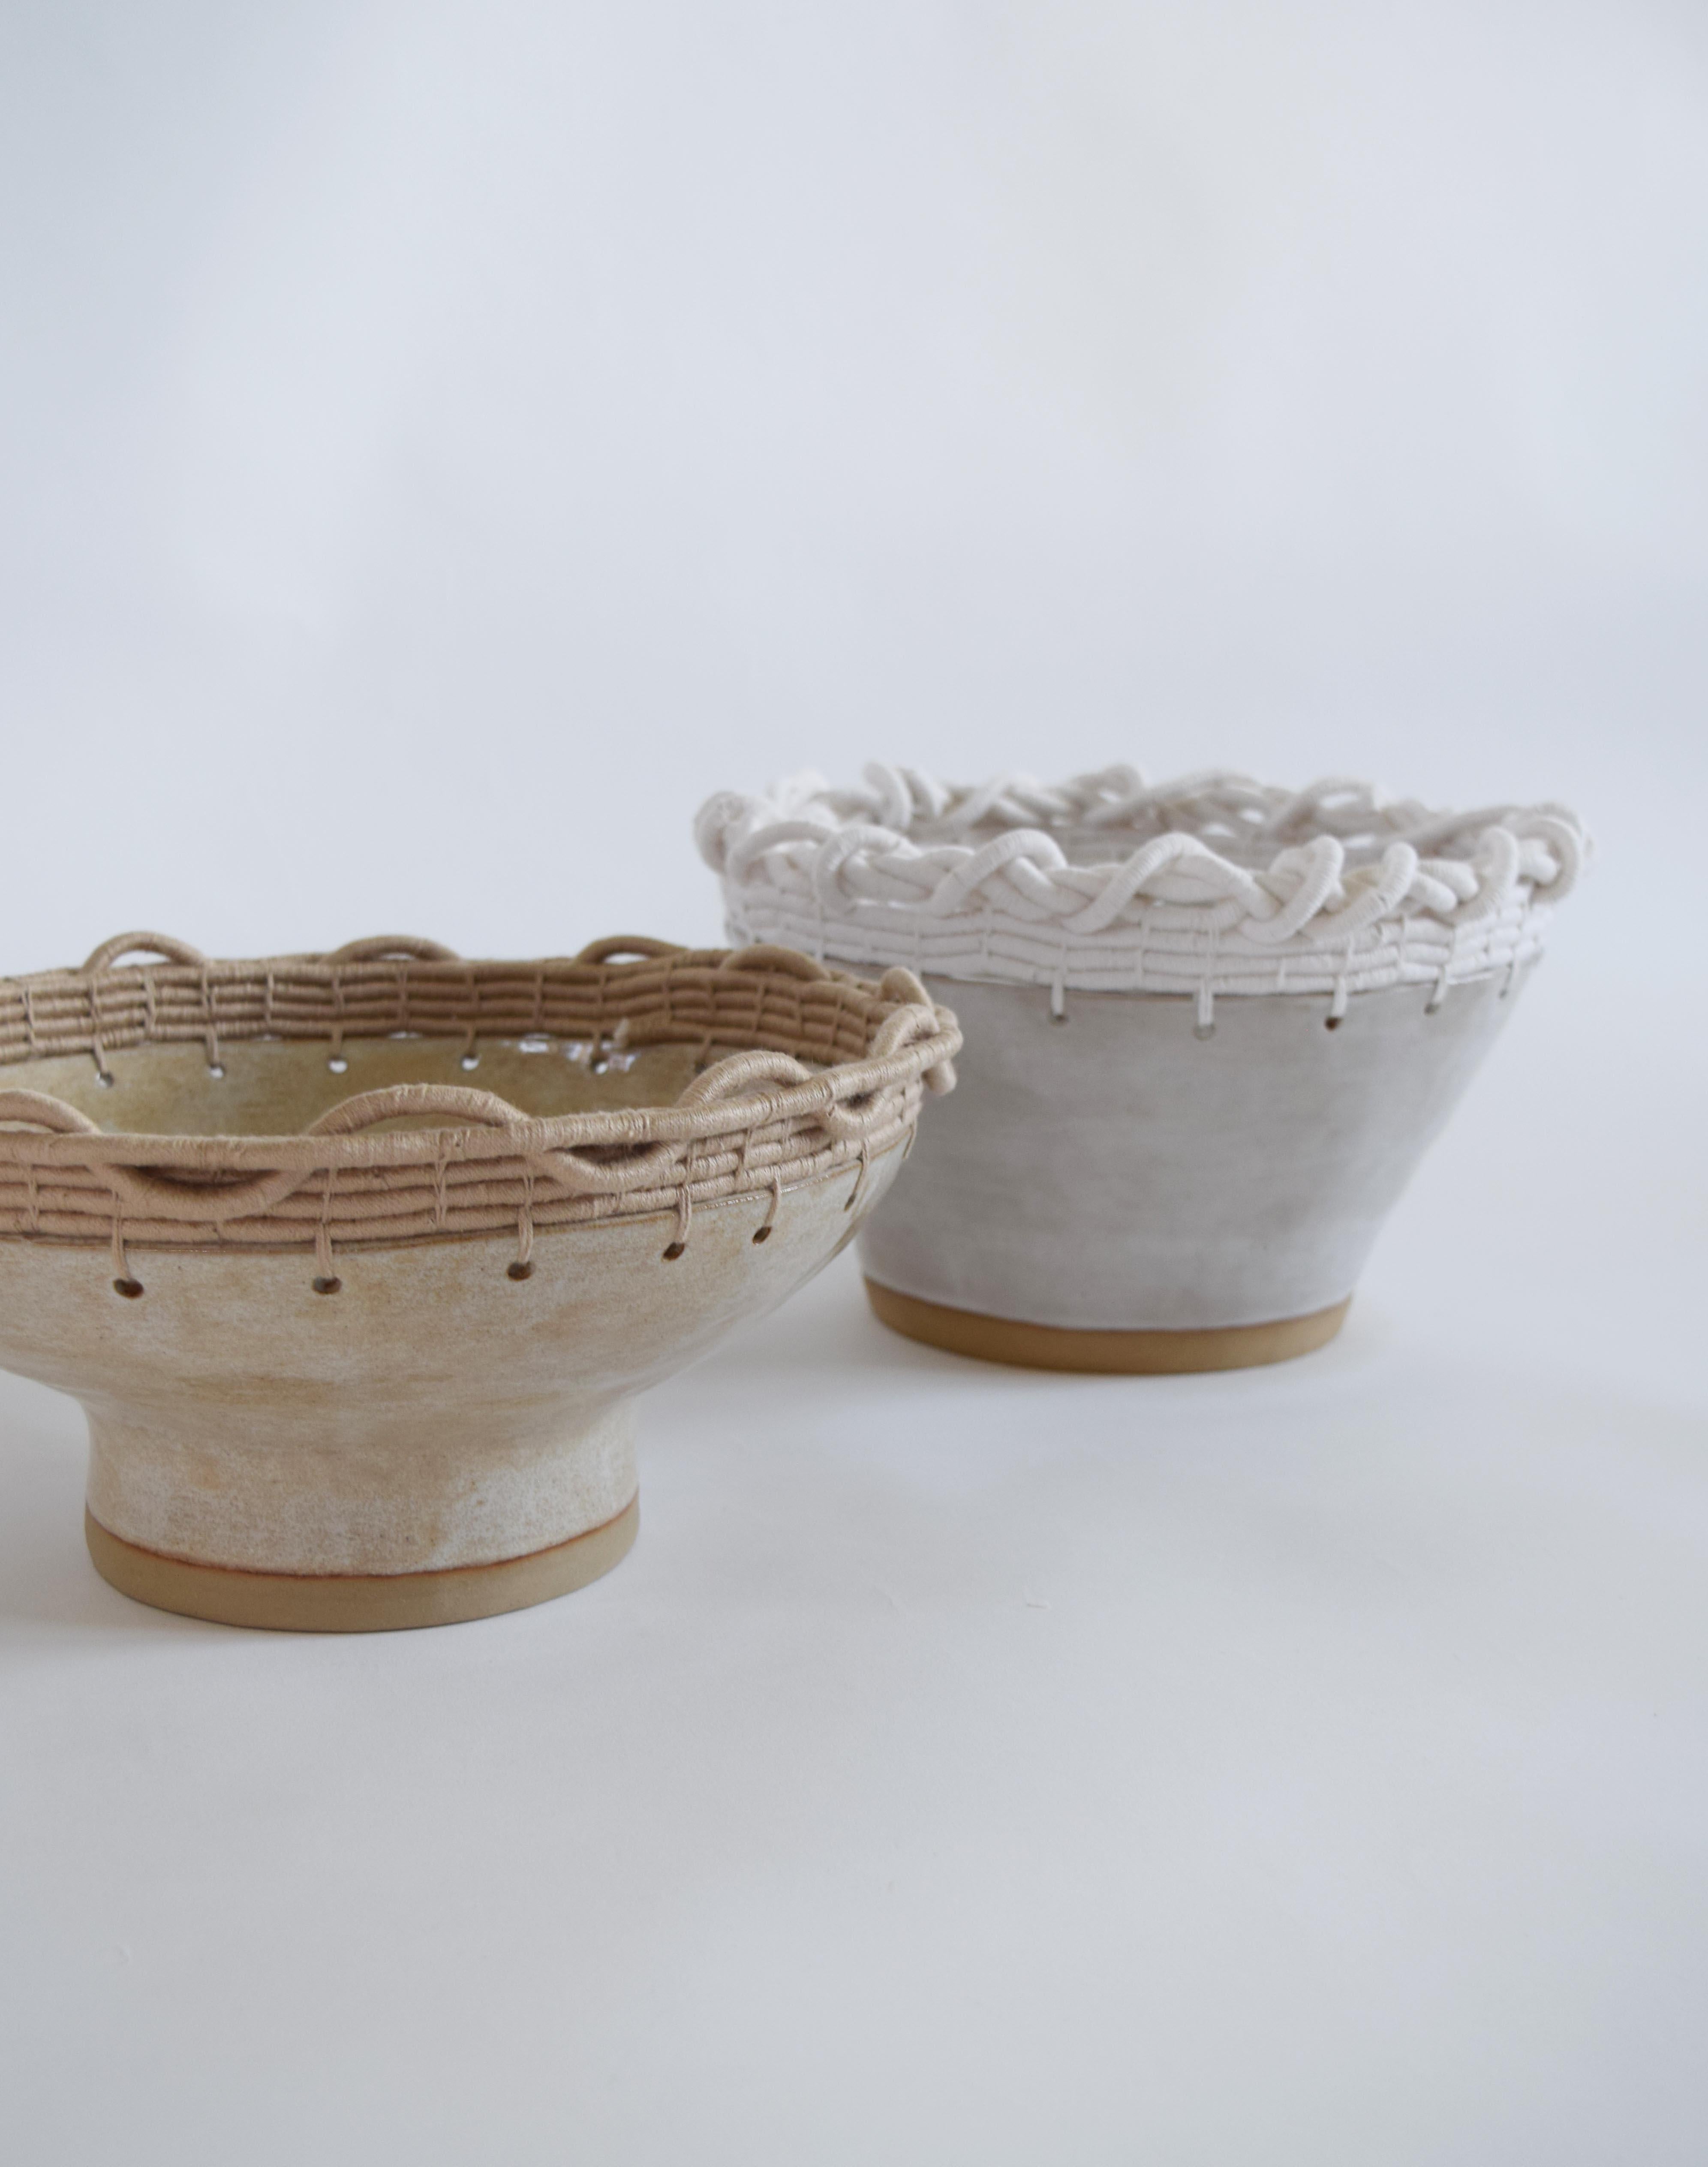 Hand-Woven One of a Kind Handmade Ceramic Bowl #792, Light Tan Glaze & Woven Cotton Upper